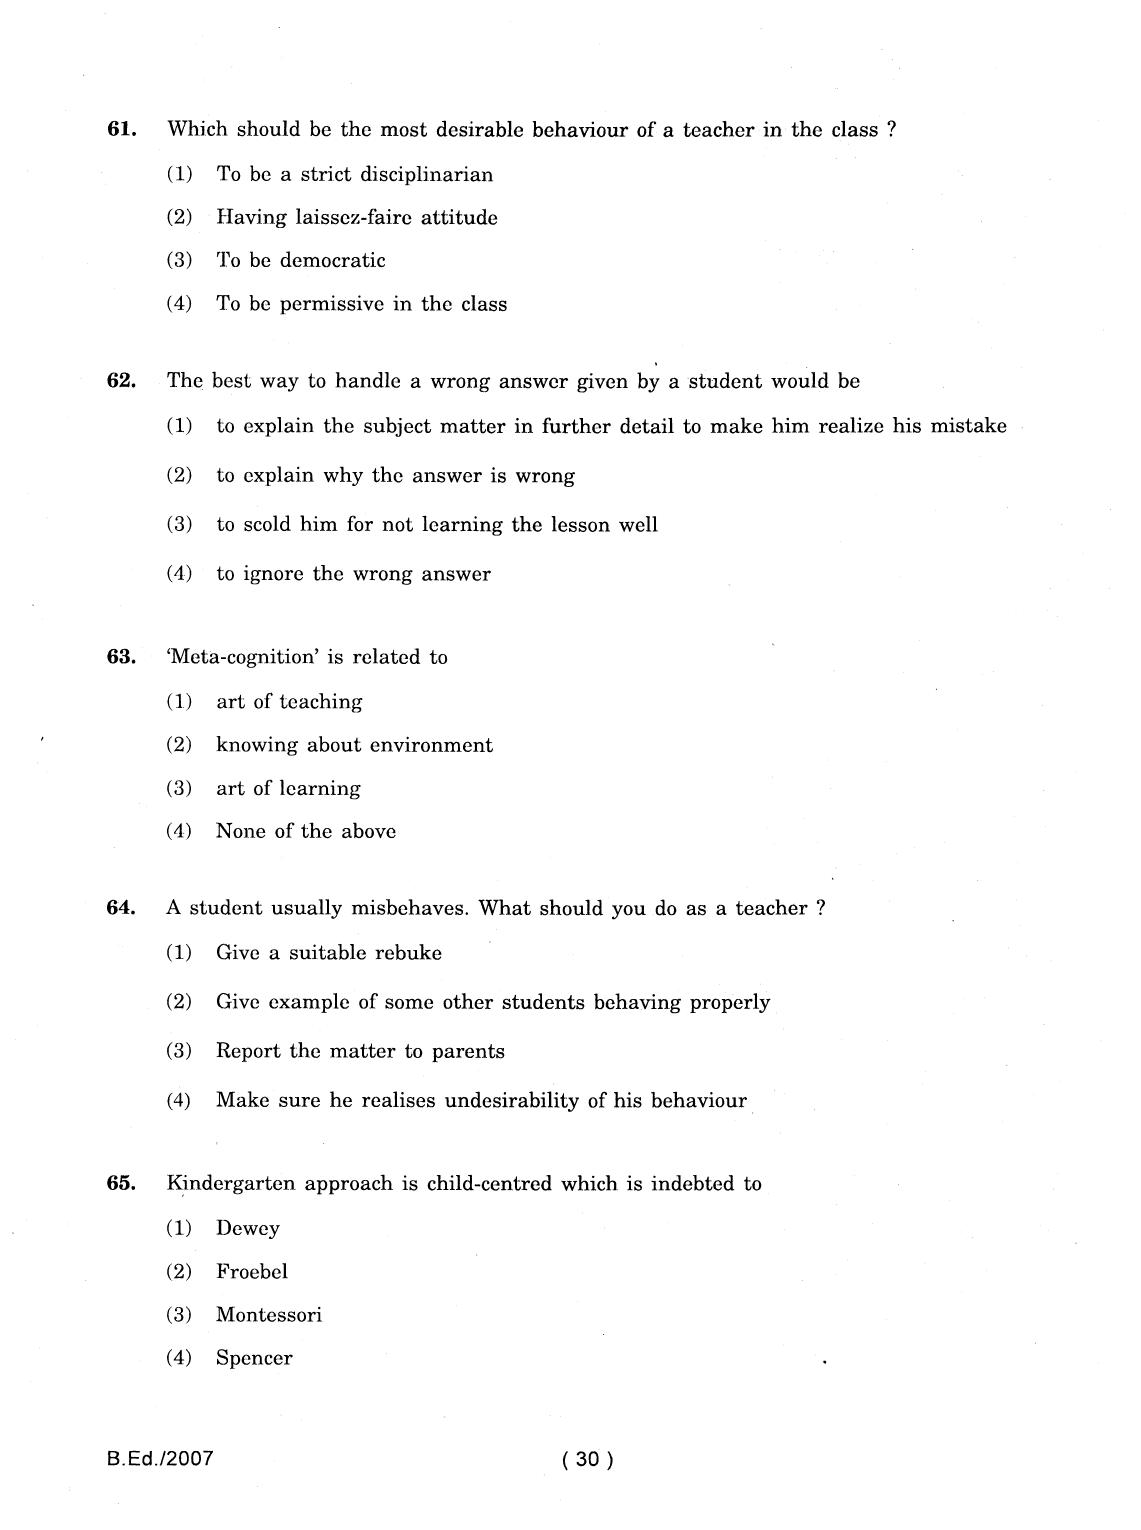 IGNOU B.Ed 2007 Question Paper - Page 30